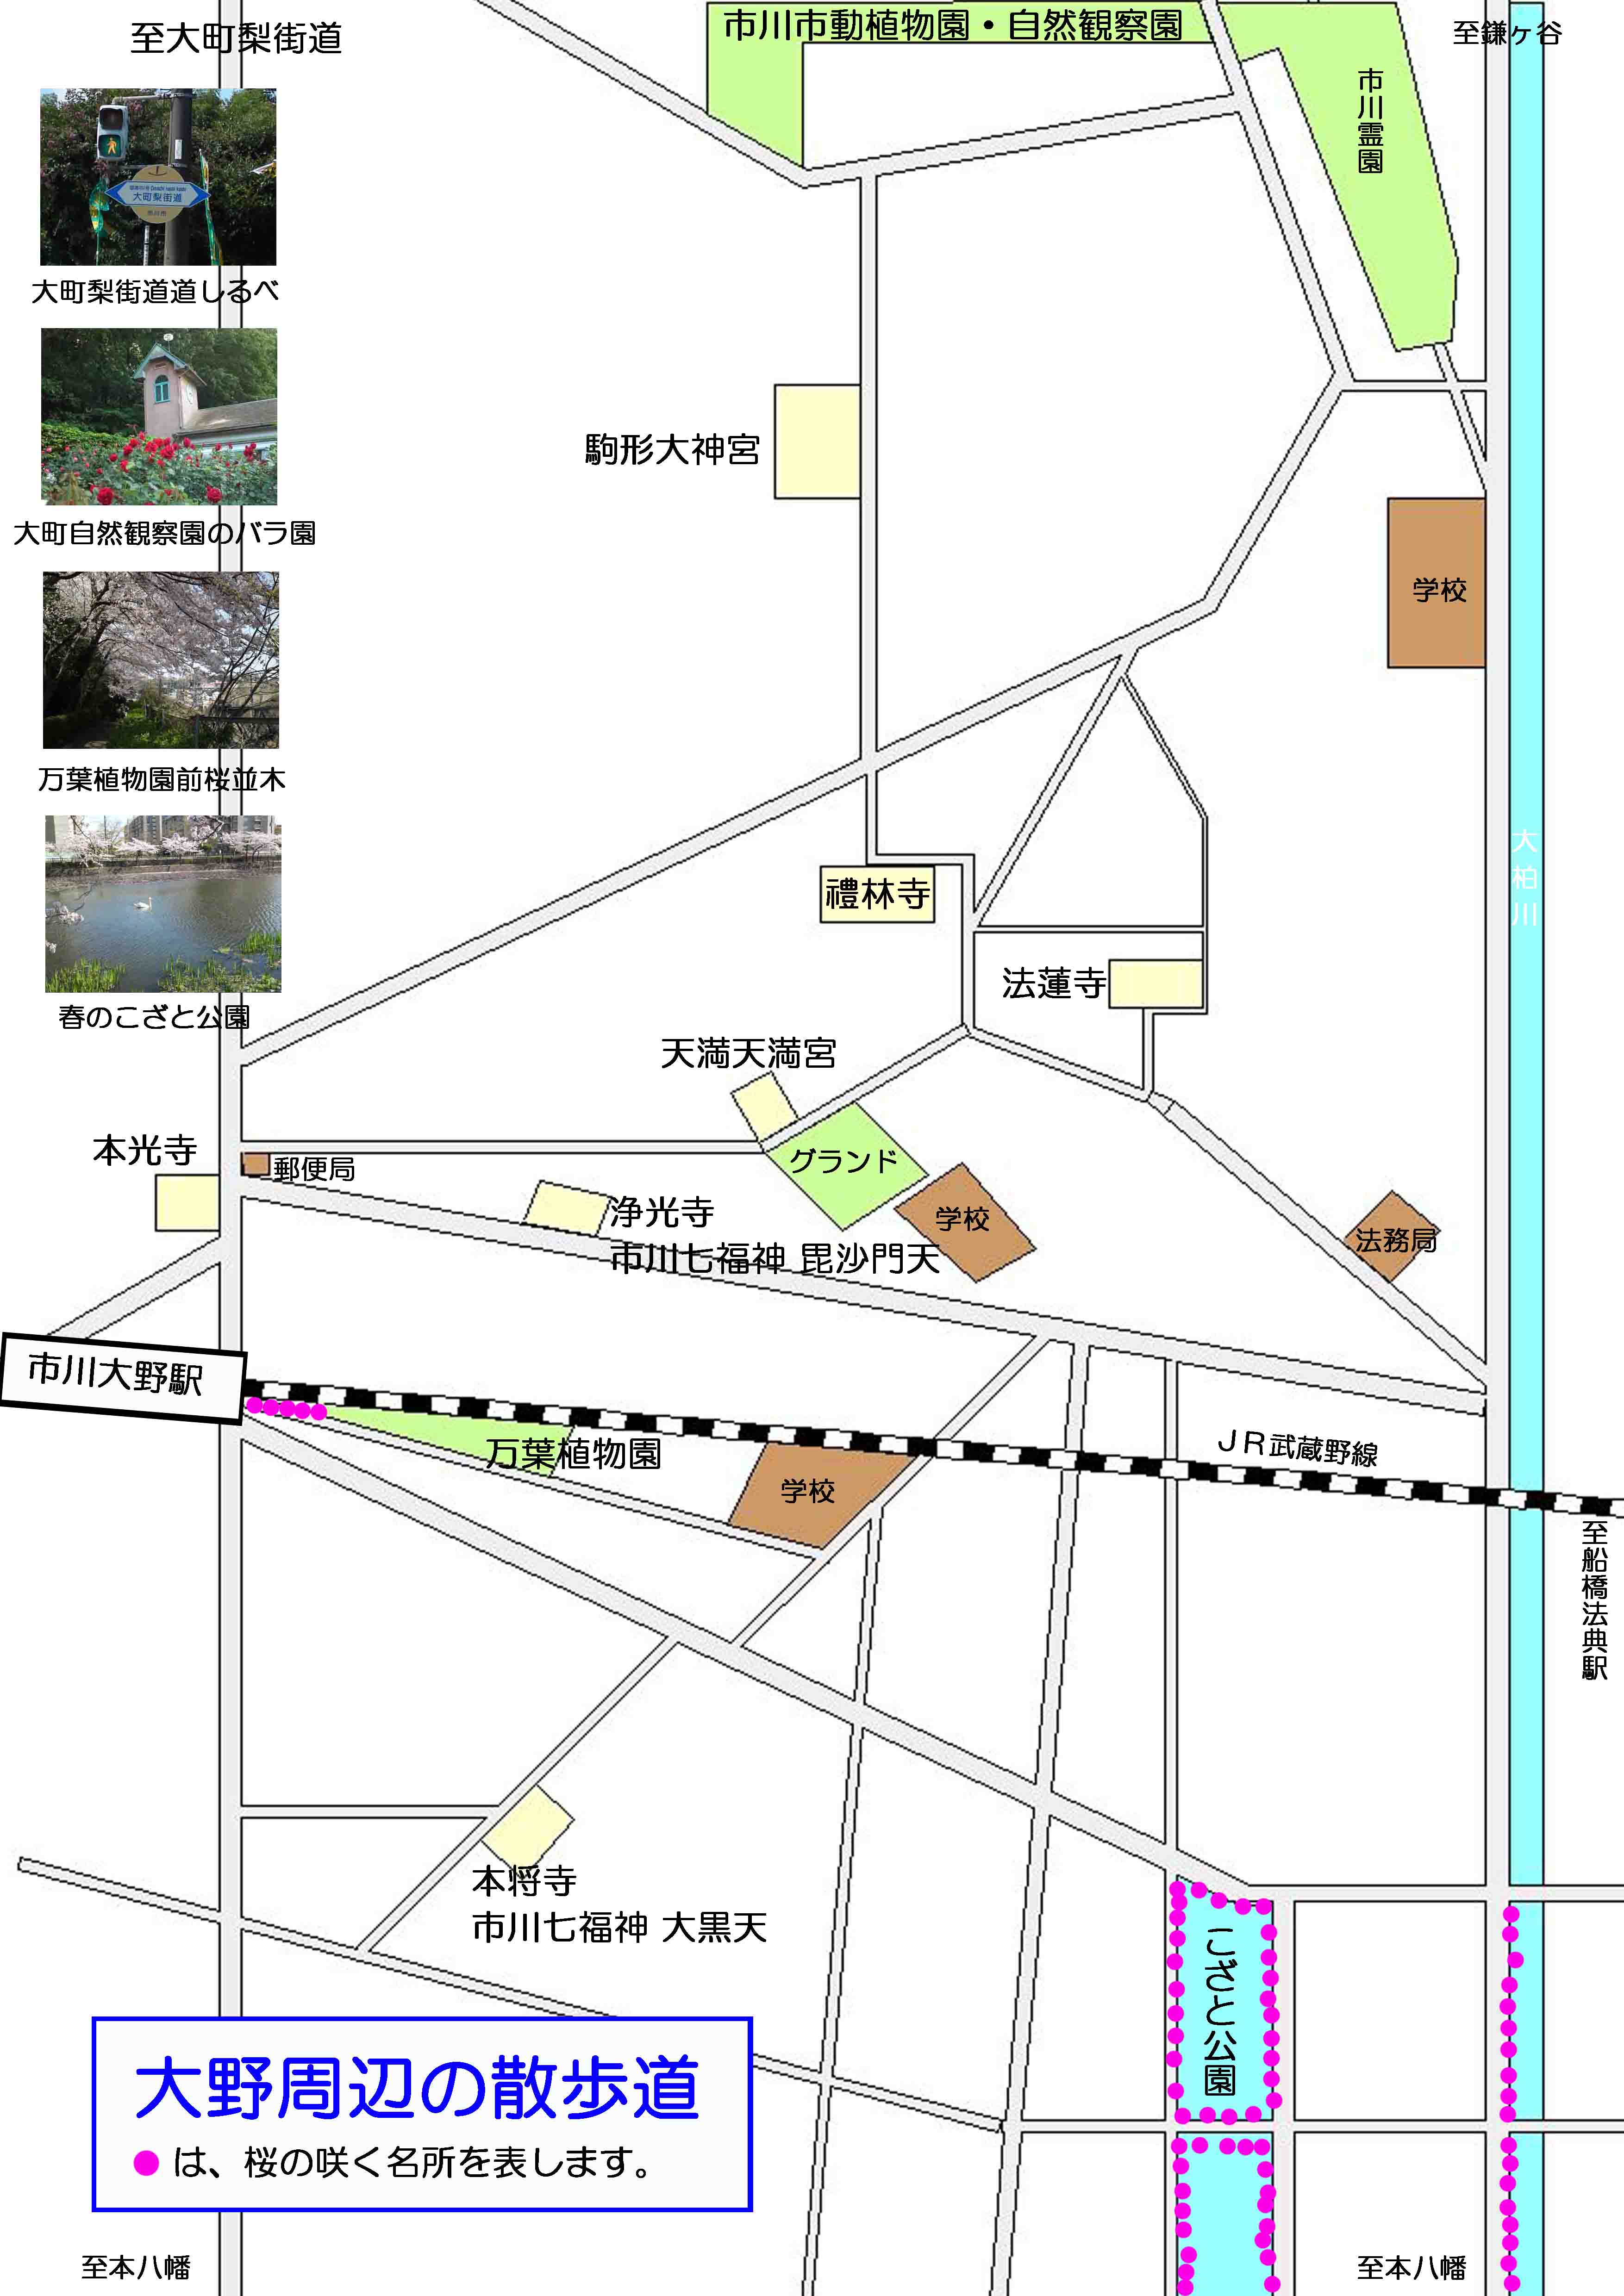 大野山浄光寺周辺の案内図